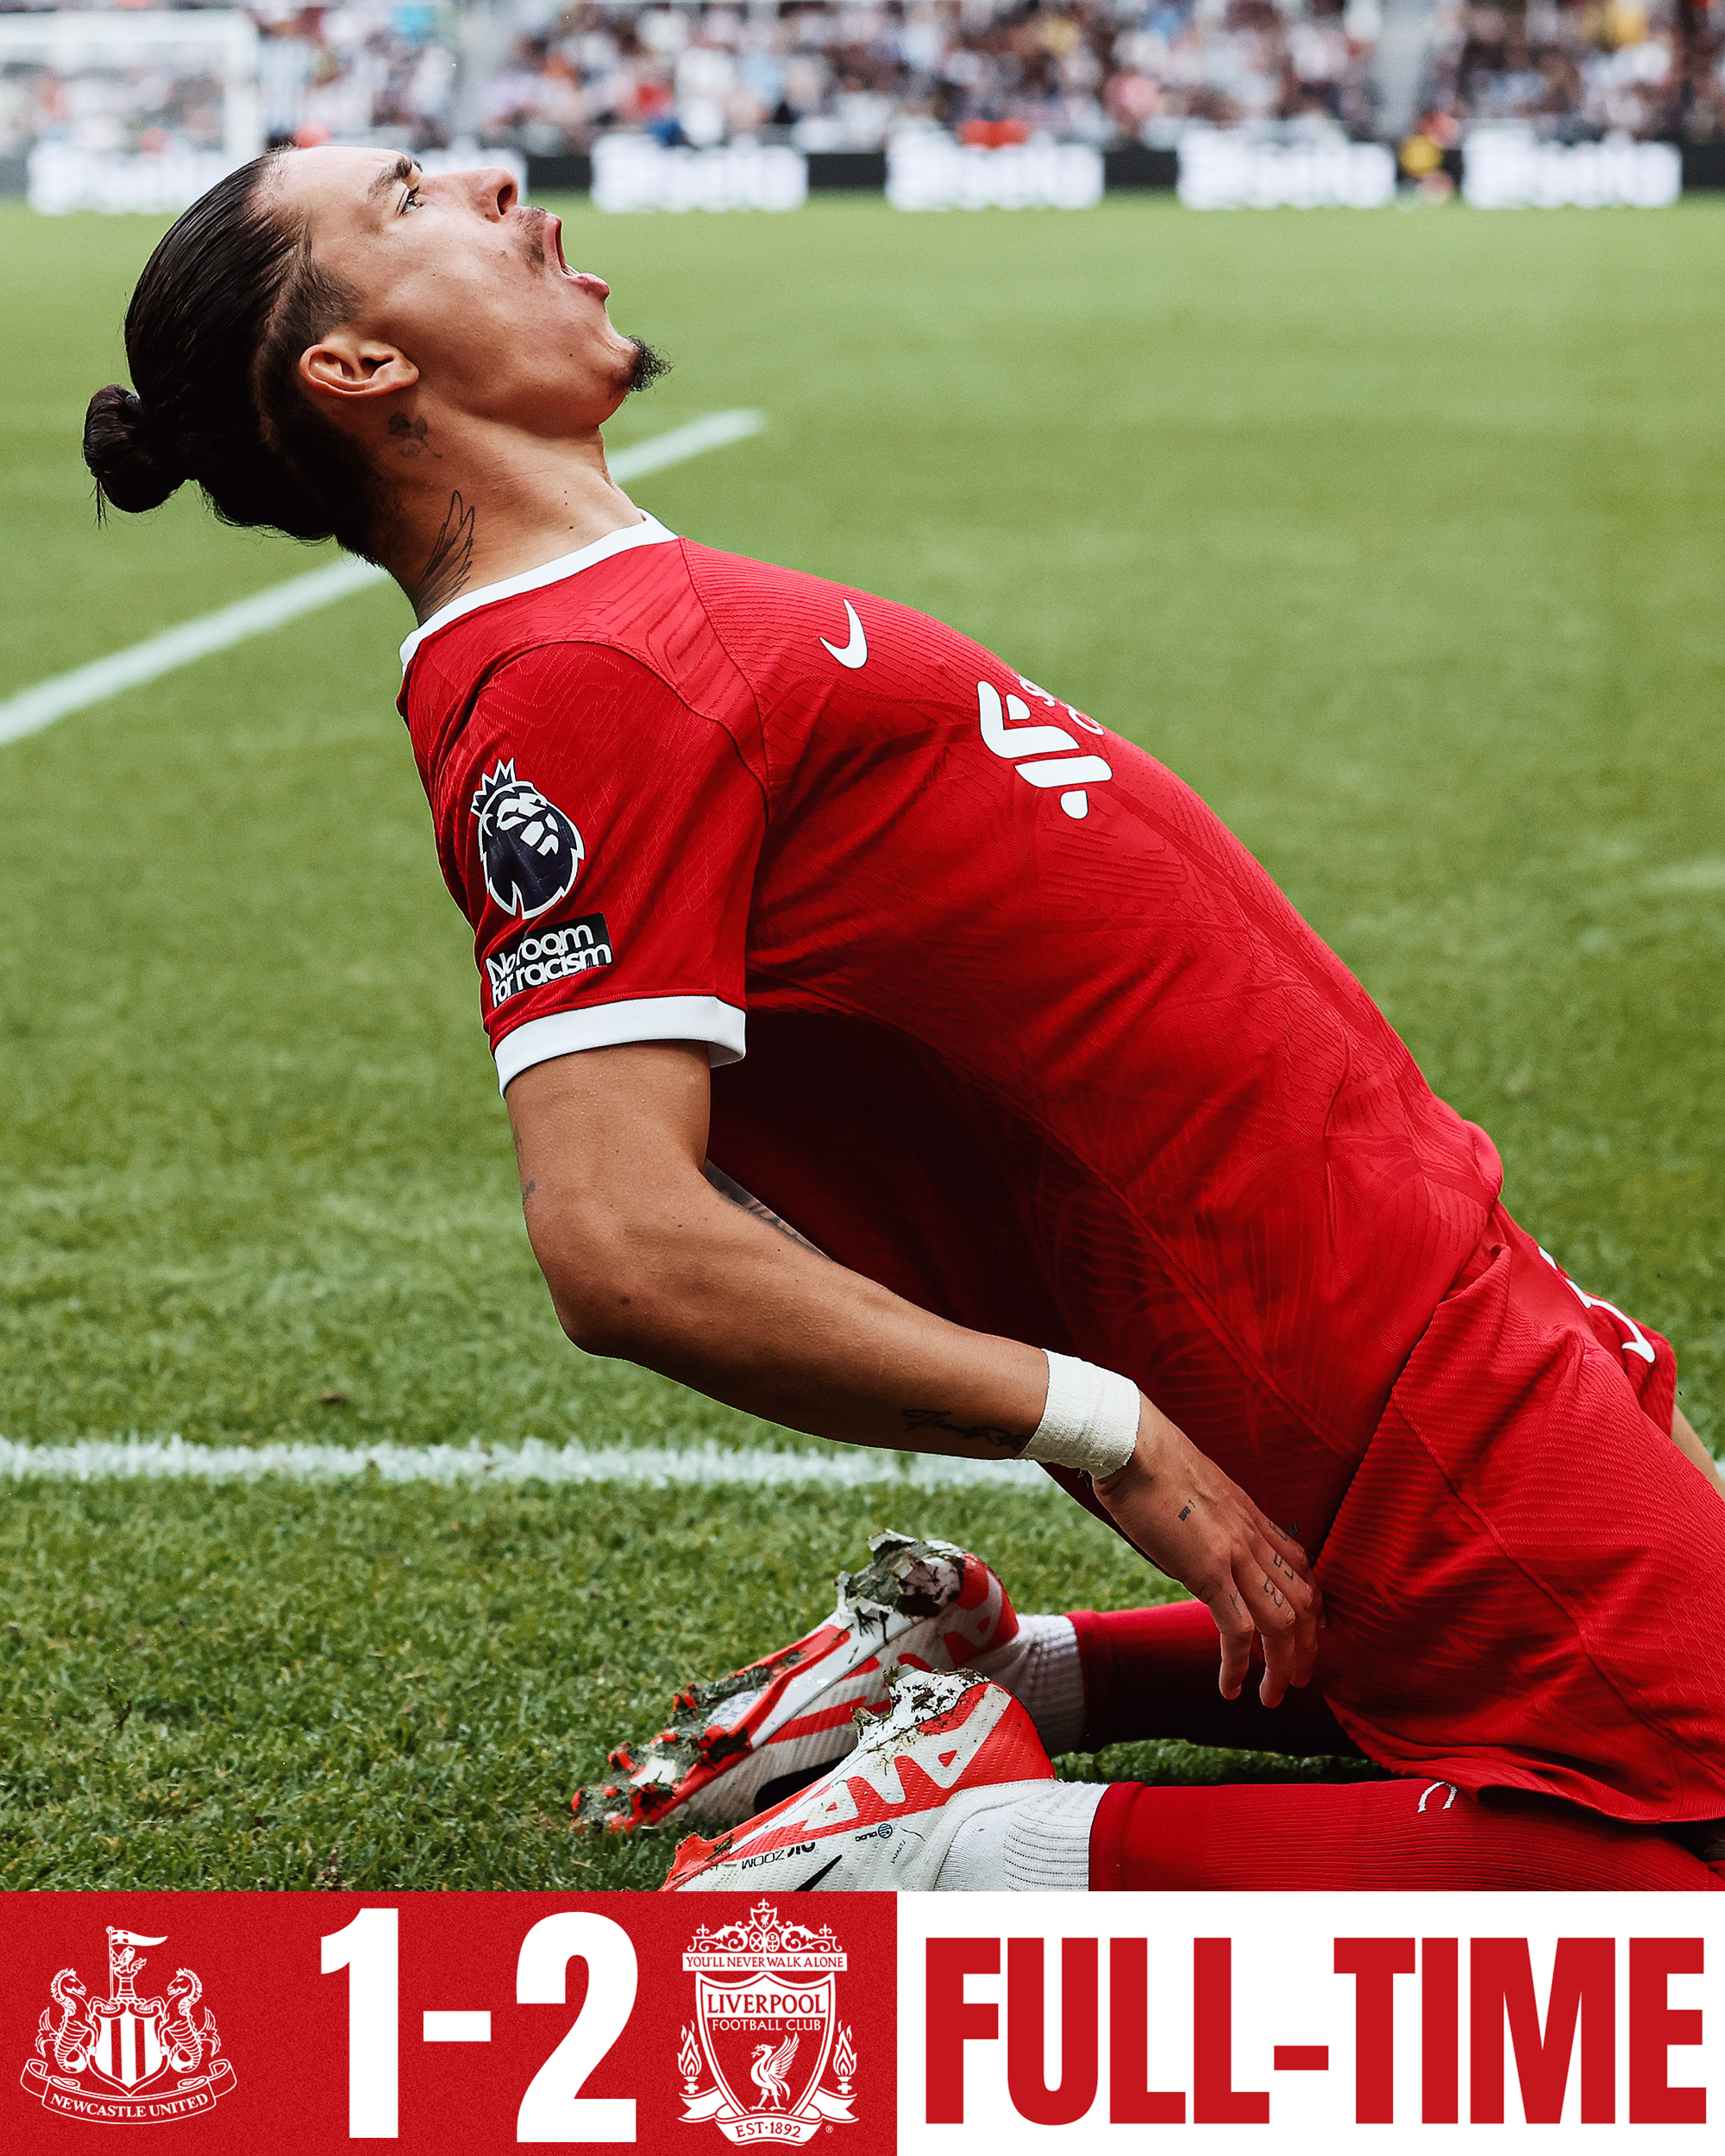 An image of Darwin Nunez celebrating showing the scoreline of Liverpool 2-1 Newcastle. 